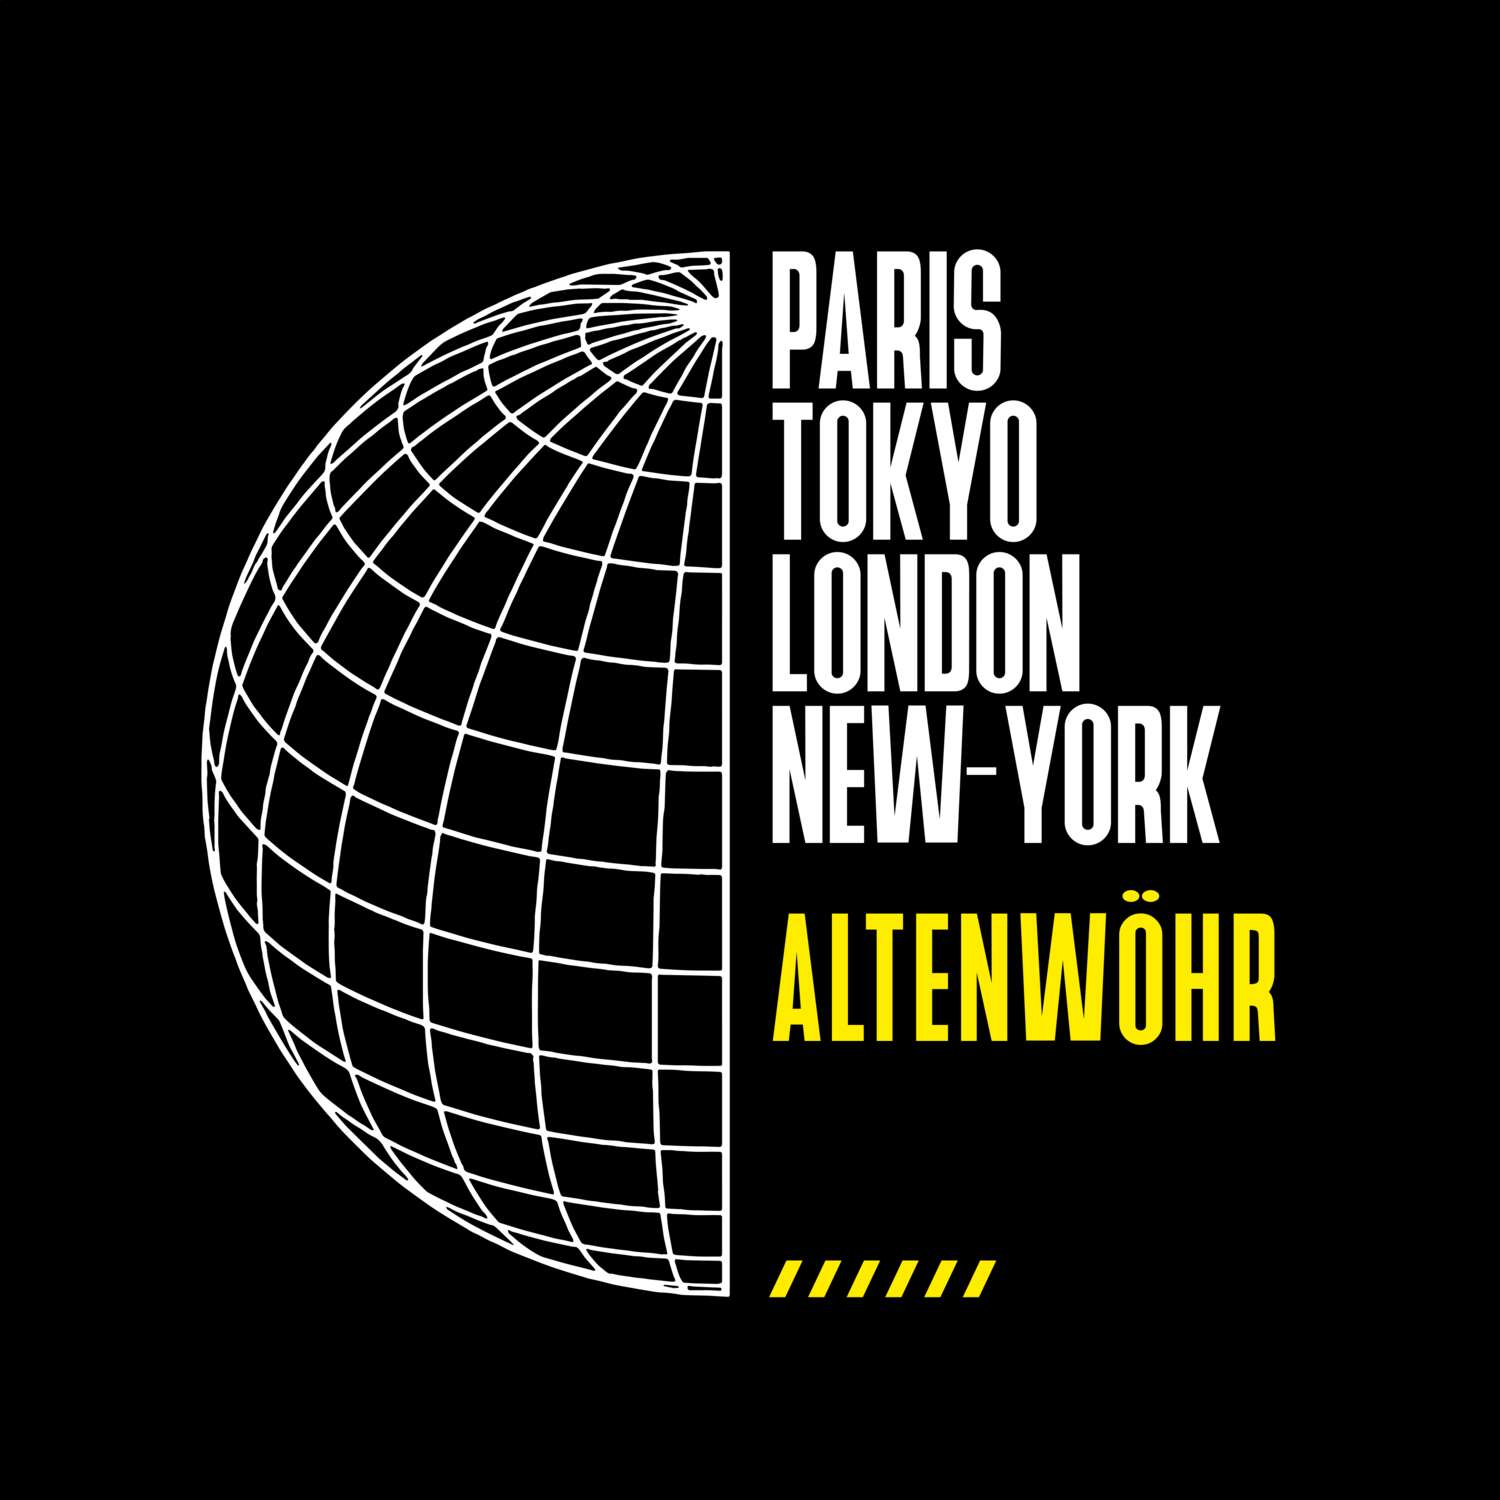 Altenwöhr T-Shirt »Paris Tokyo London«